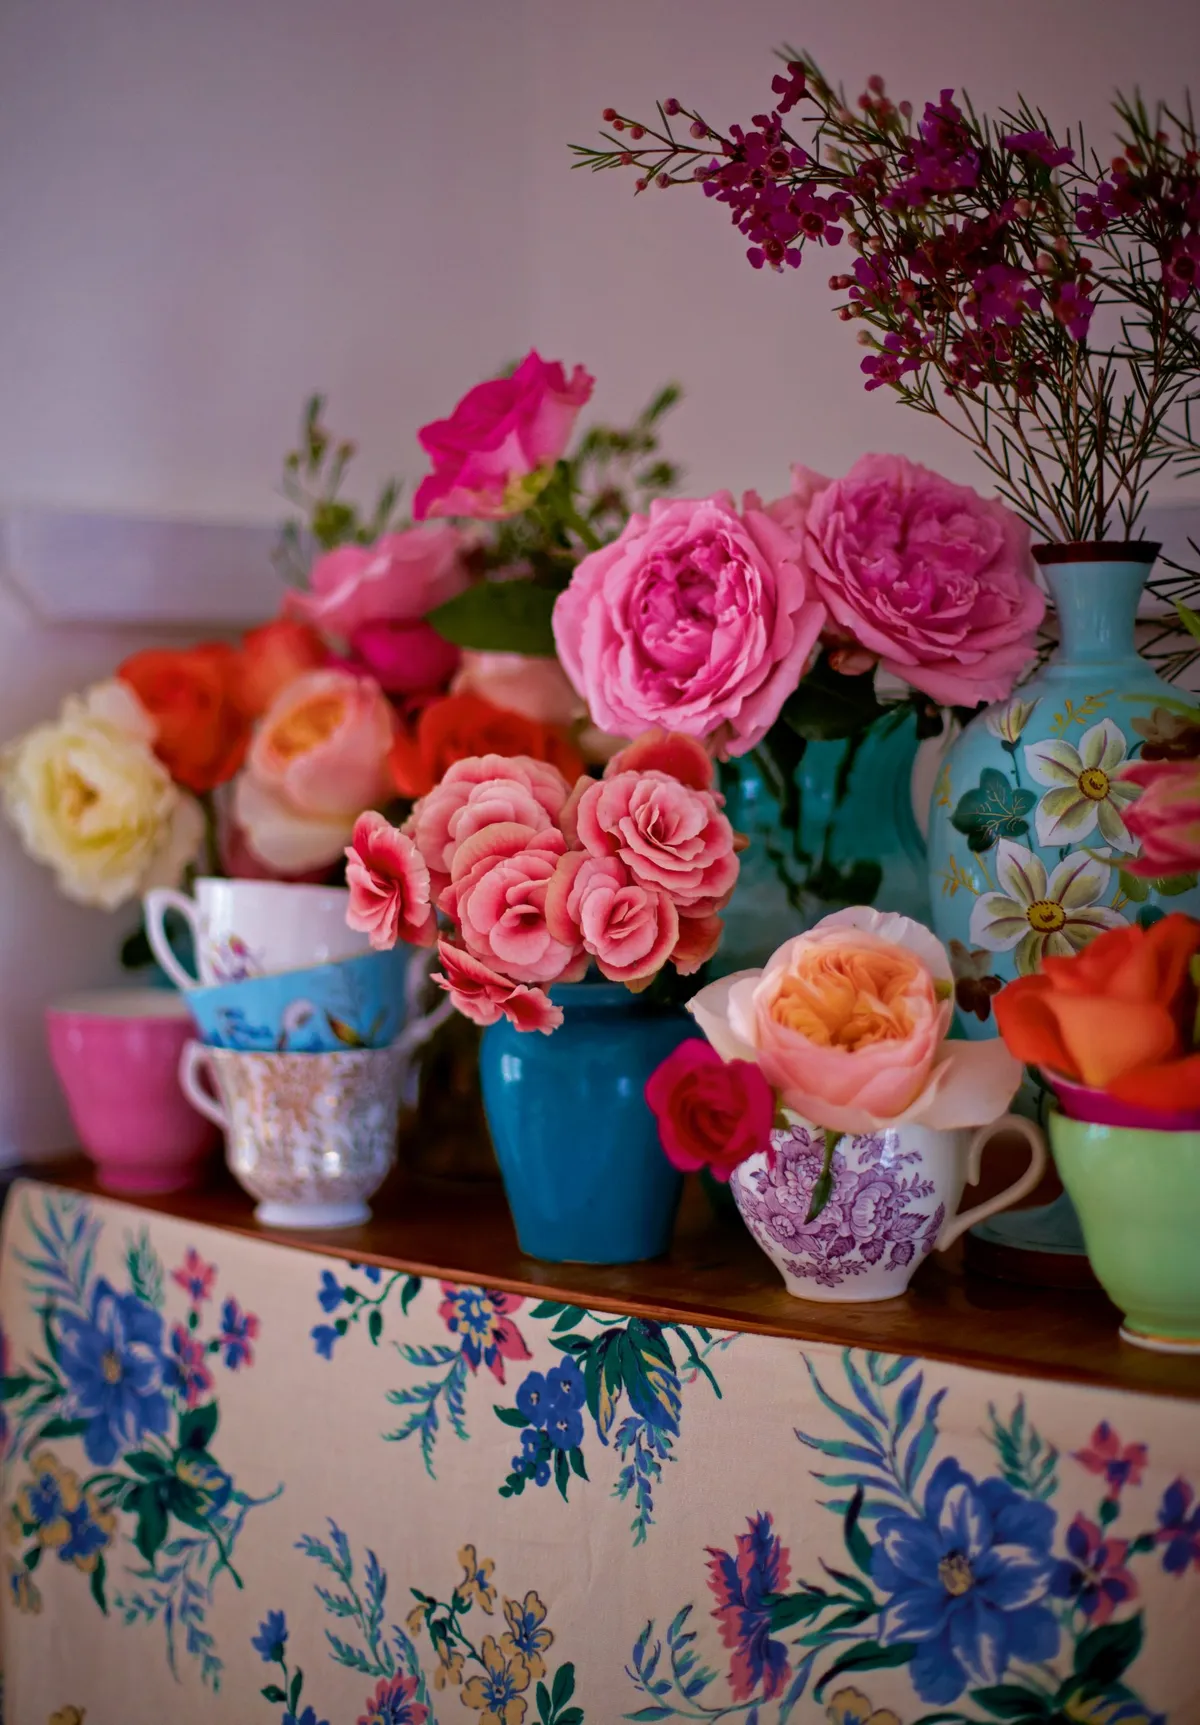 Vintage teacups used to display colourful flowers